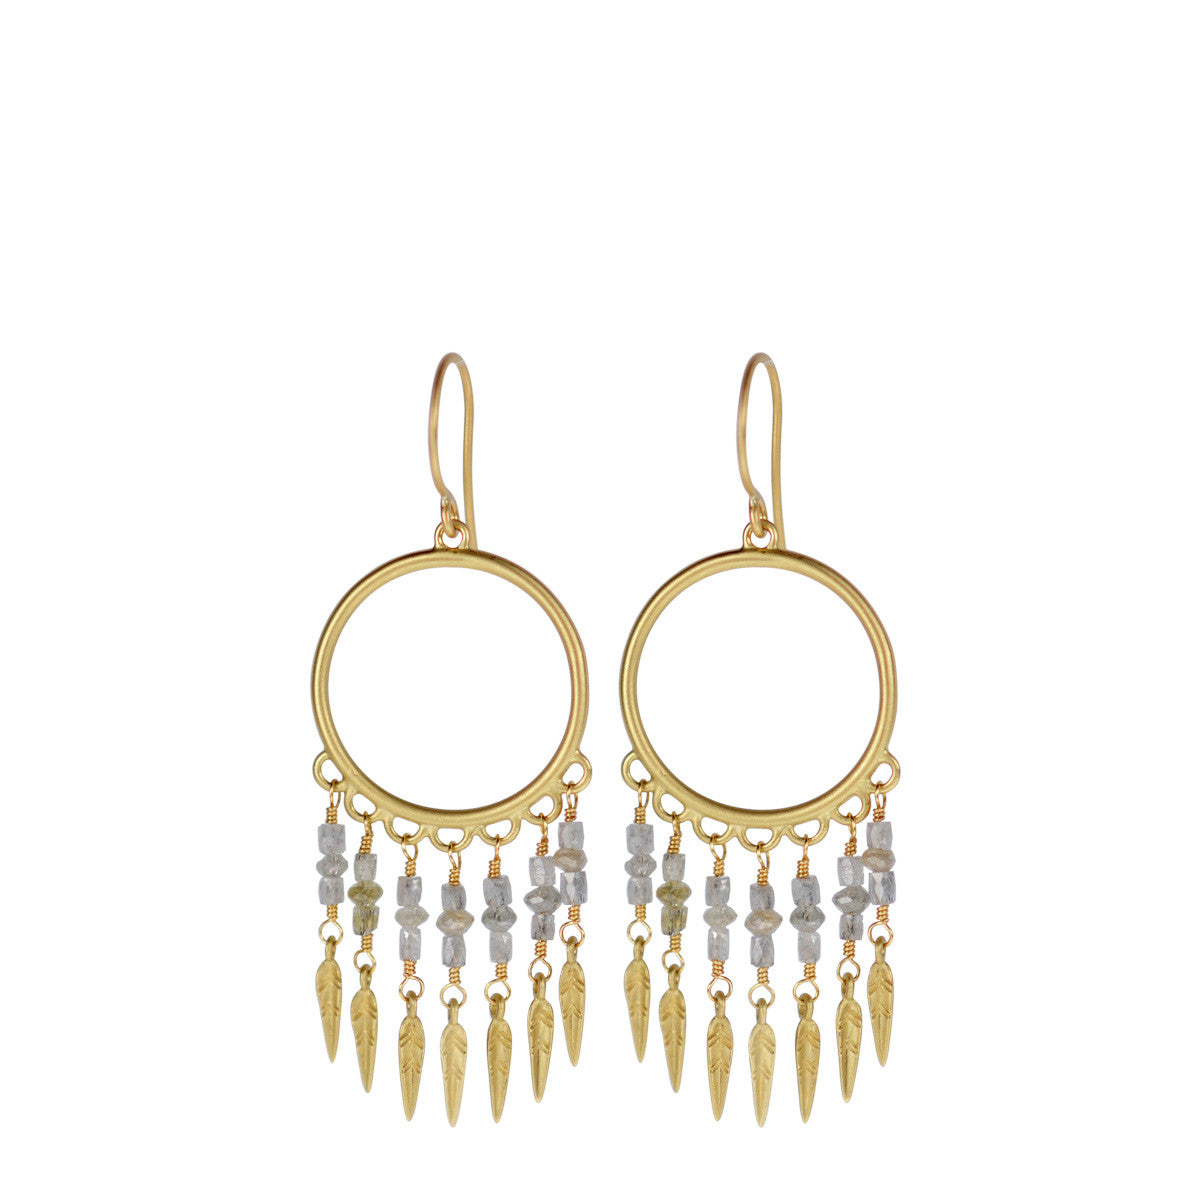 Crunchy Fashion Jewellery Feather Dream Catcher Earrings for Girls/Women  (Black)| Gift for Women, Girl, Friend, Wife : Amazon.in: Fashion